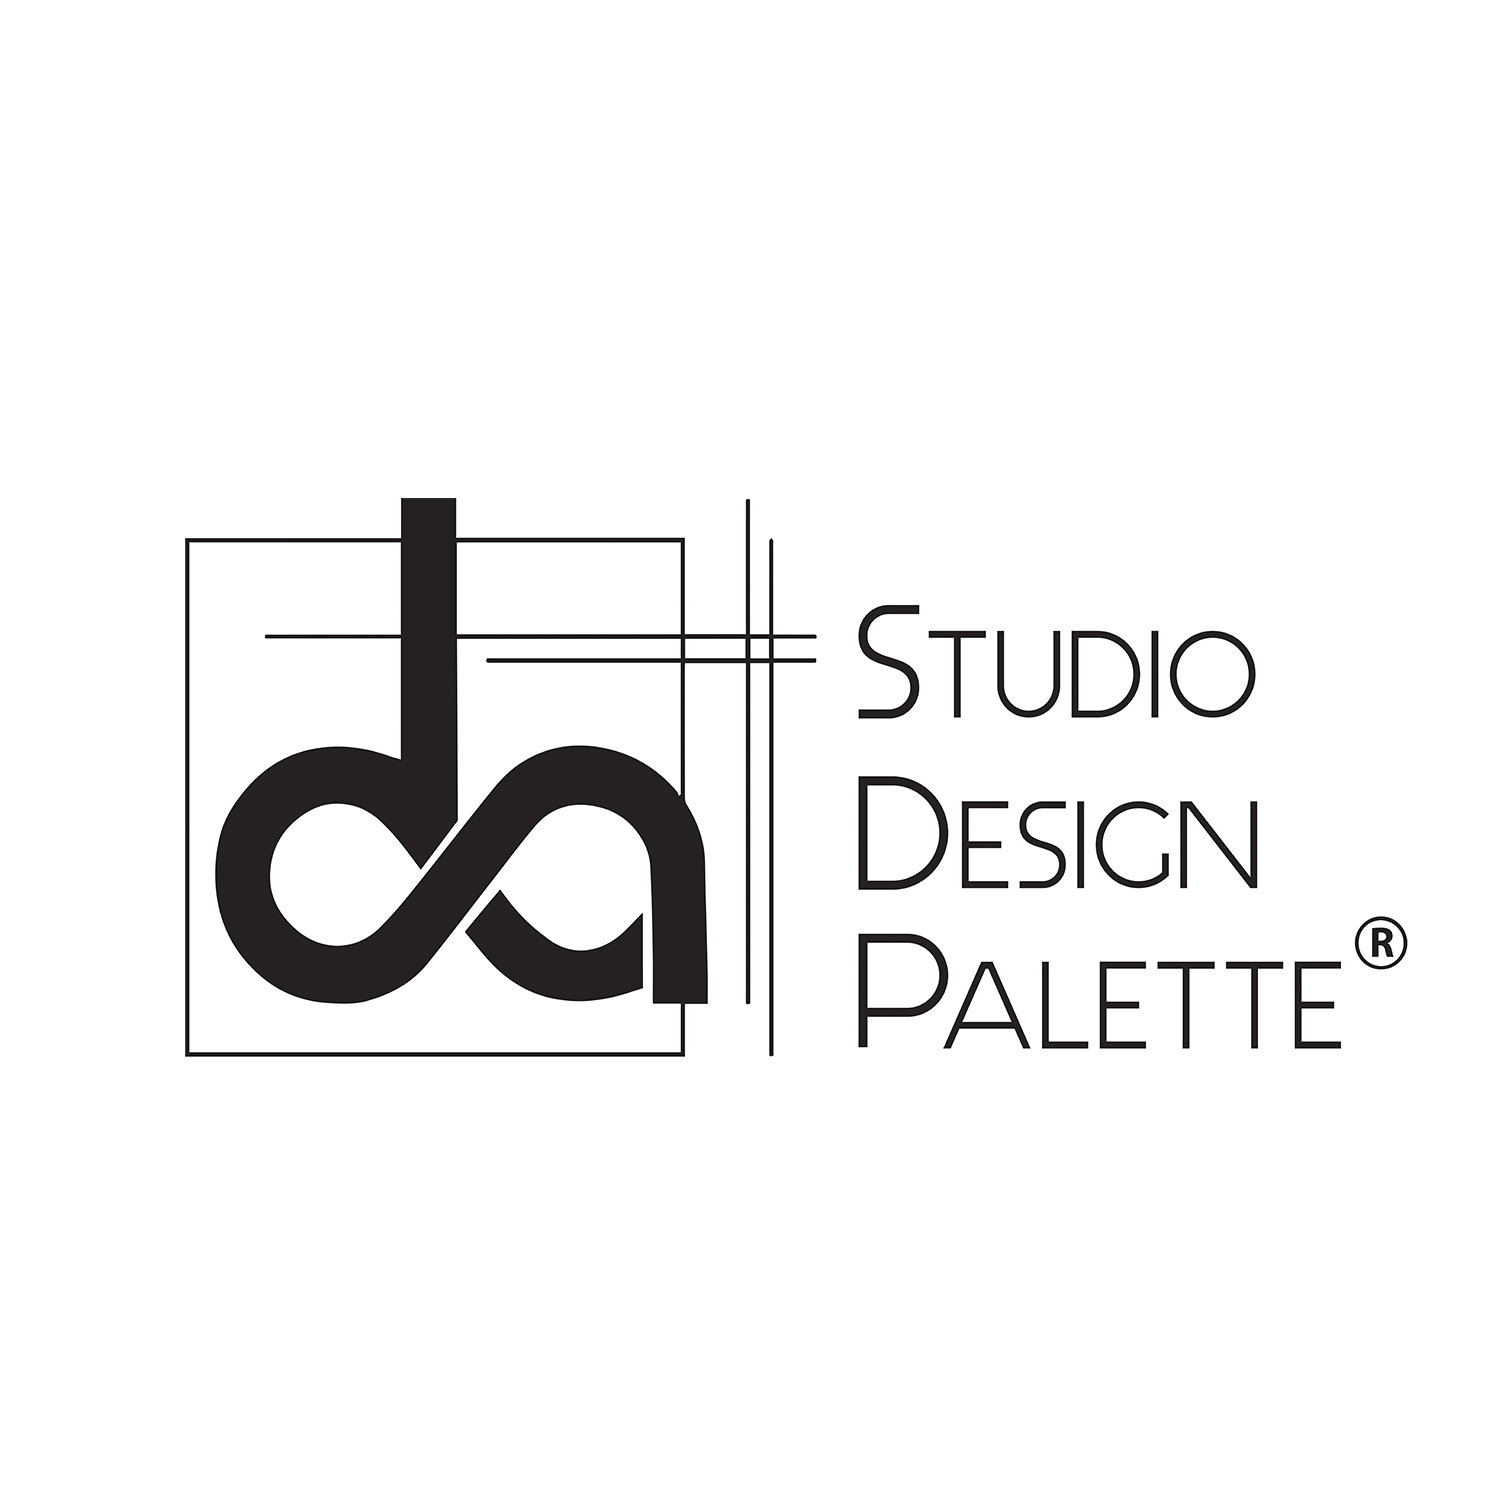 Studio Design Palette|Architect|Professional Services